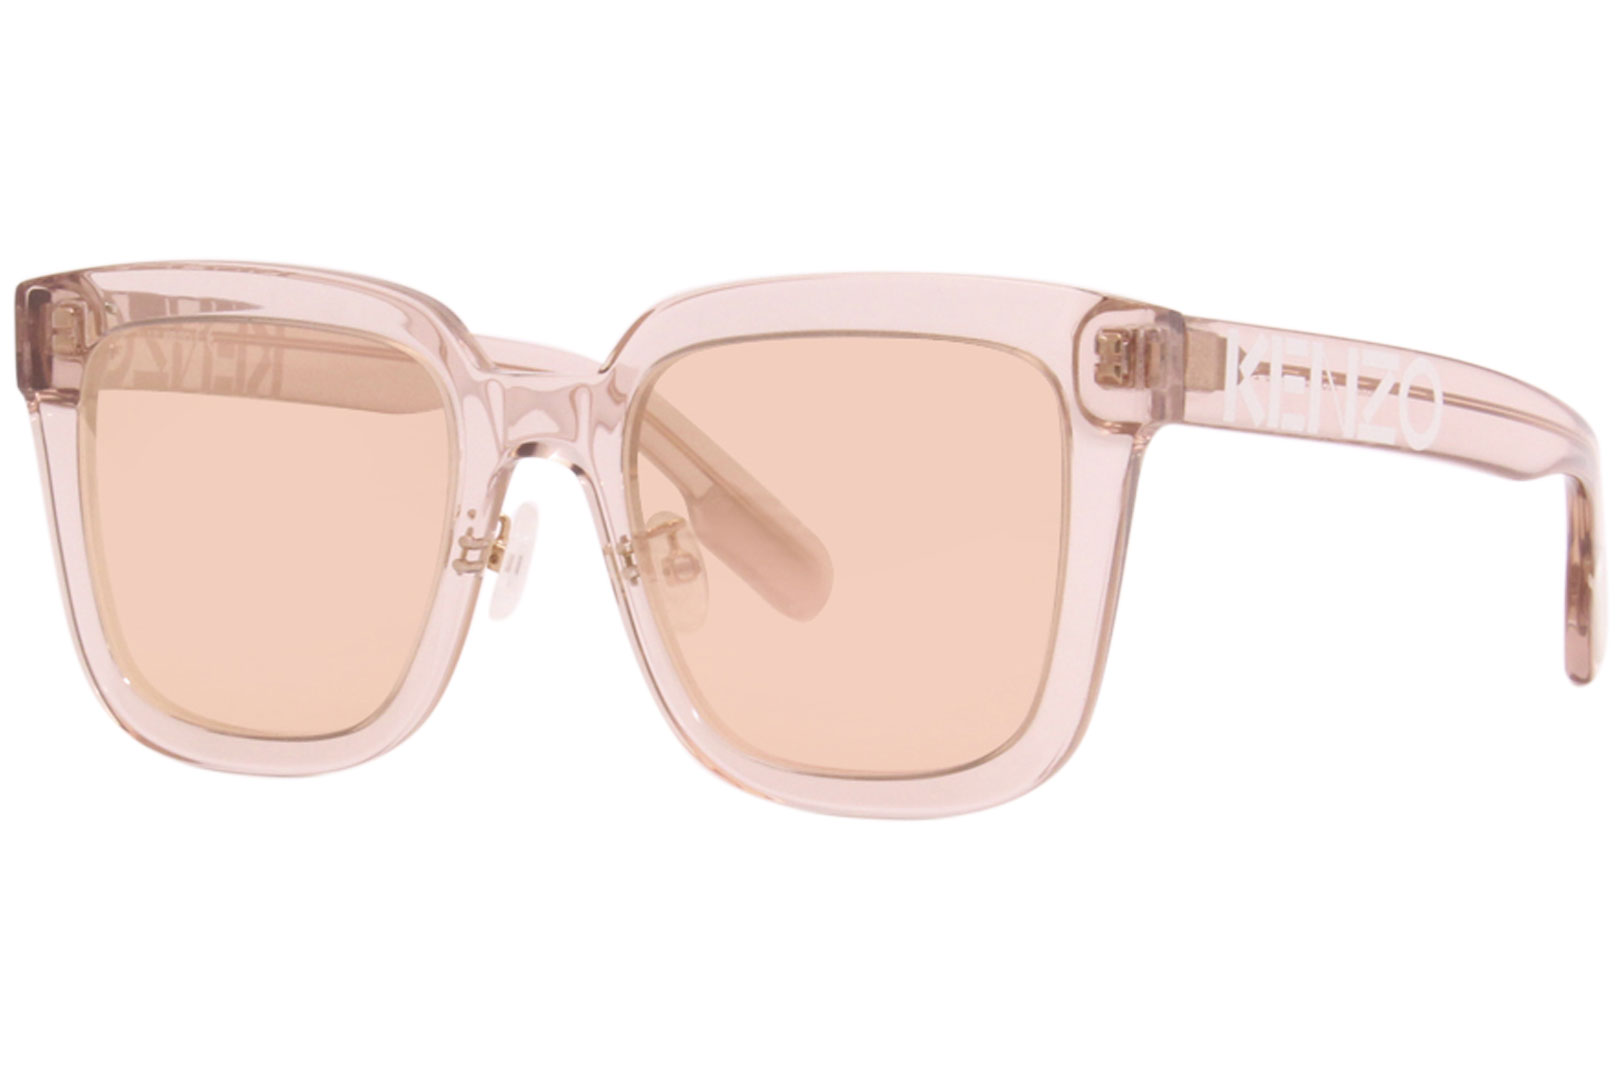 Kenzo Sunglasses Women's KZ40087F 72G Pink/Brown Mirror 52-20-145mm ...